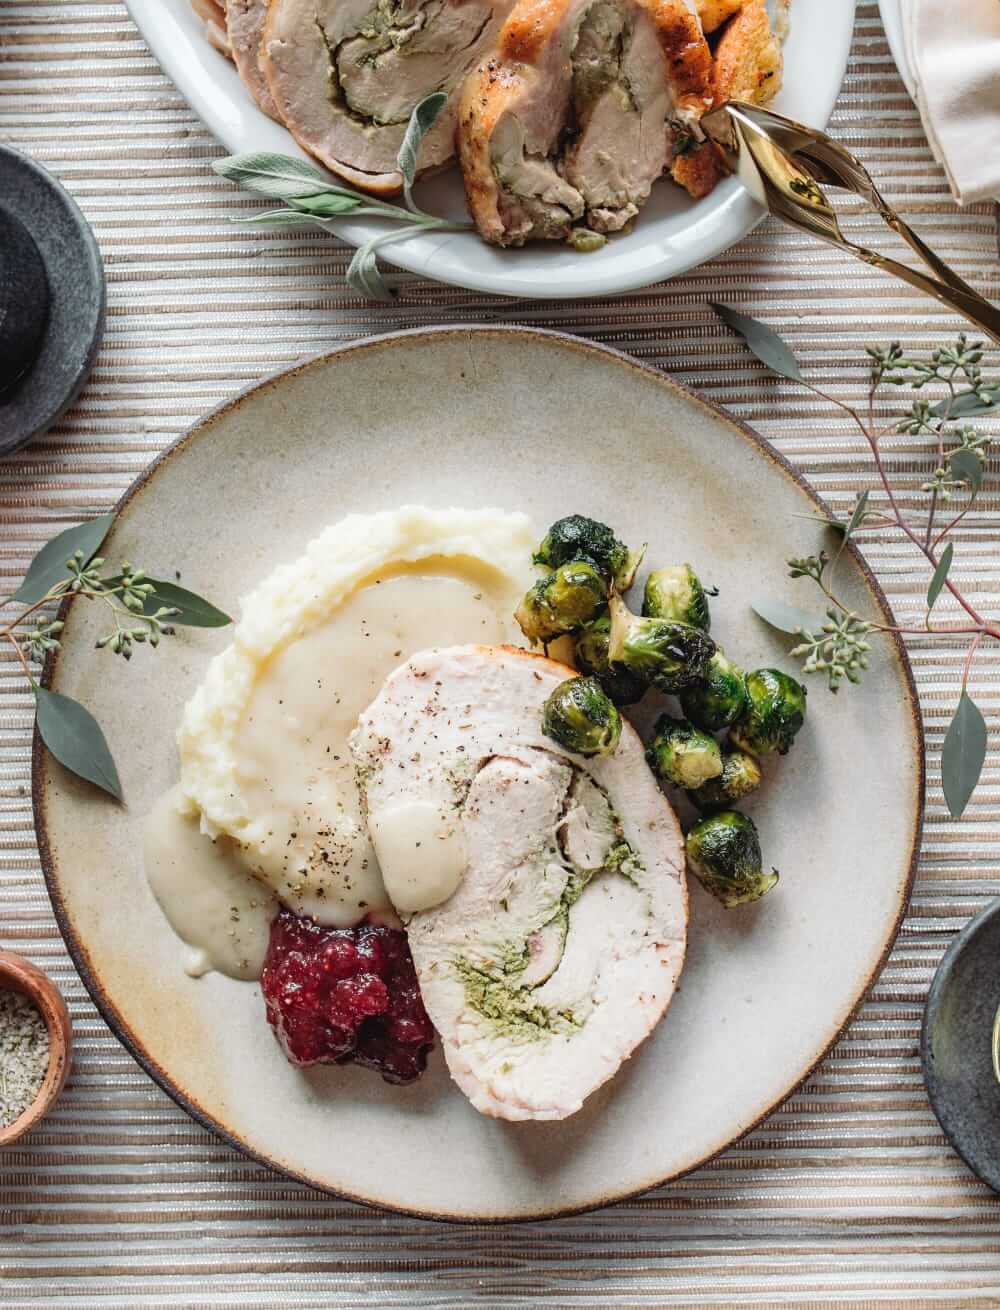 Thanksgiving turkey meal